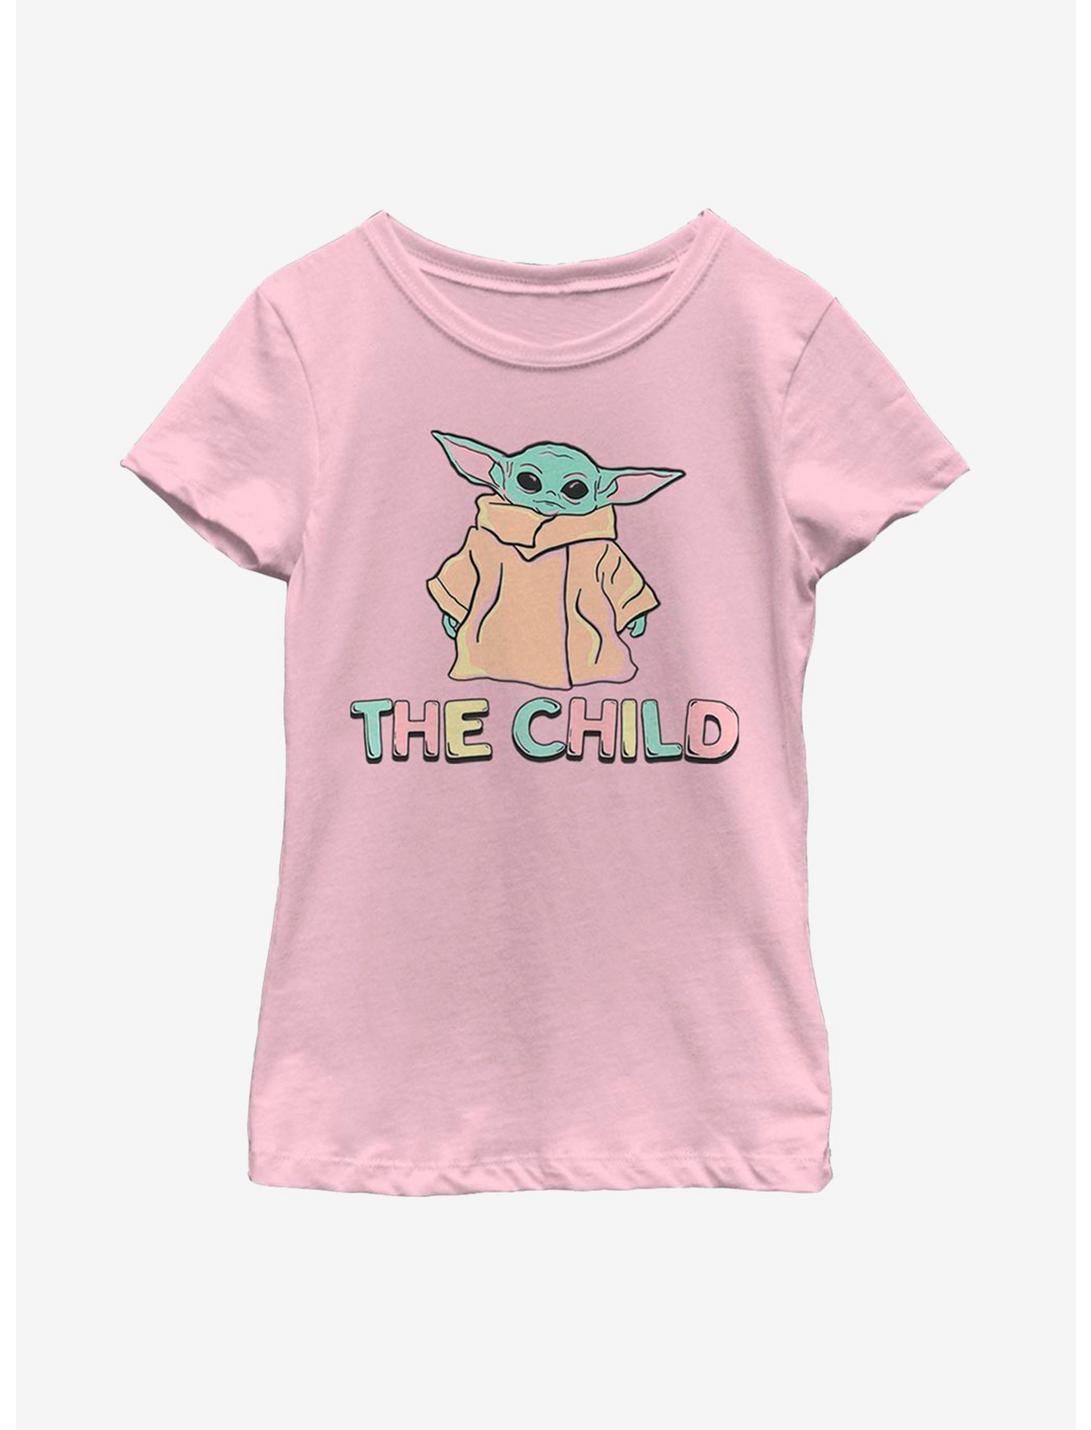 Plus Size Star Wars The Mandalorian The Child Pastel Youth Girls T-Shirt, PINK, hi-res